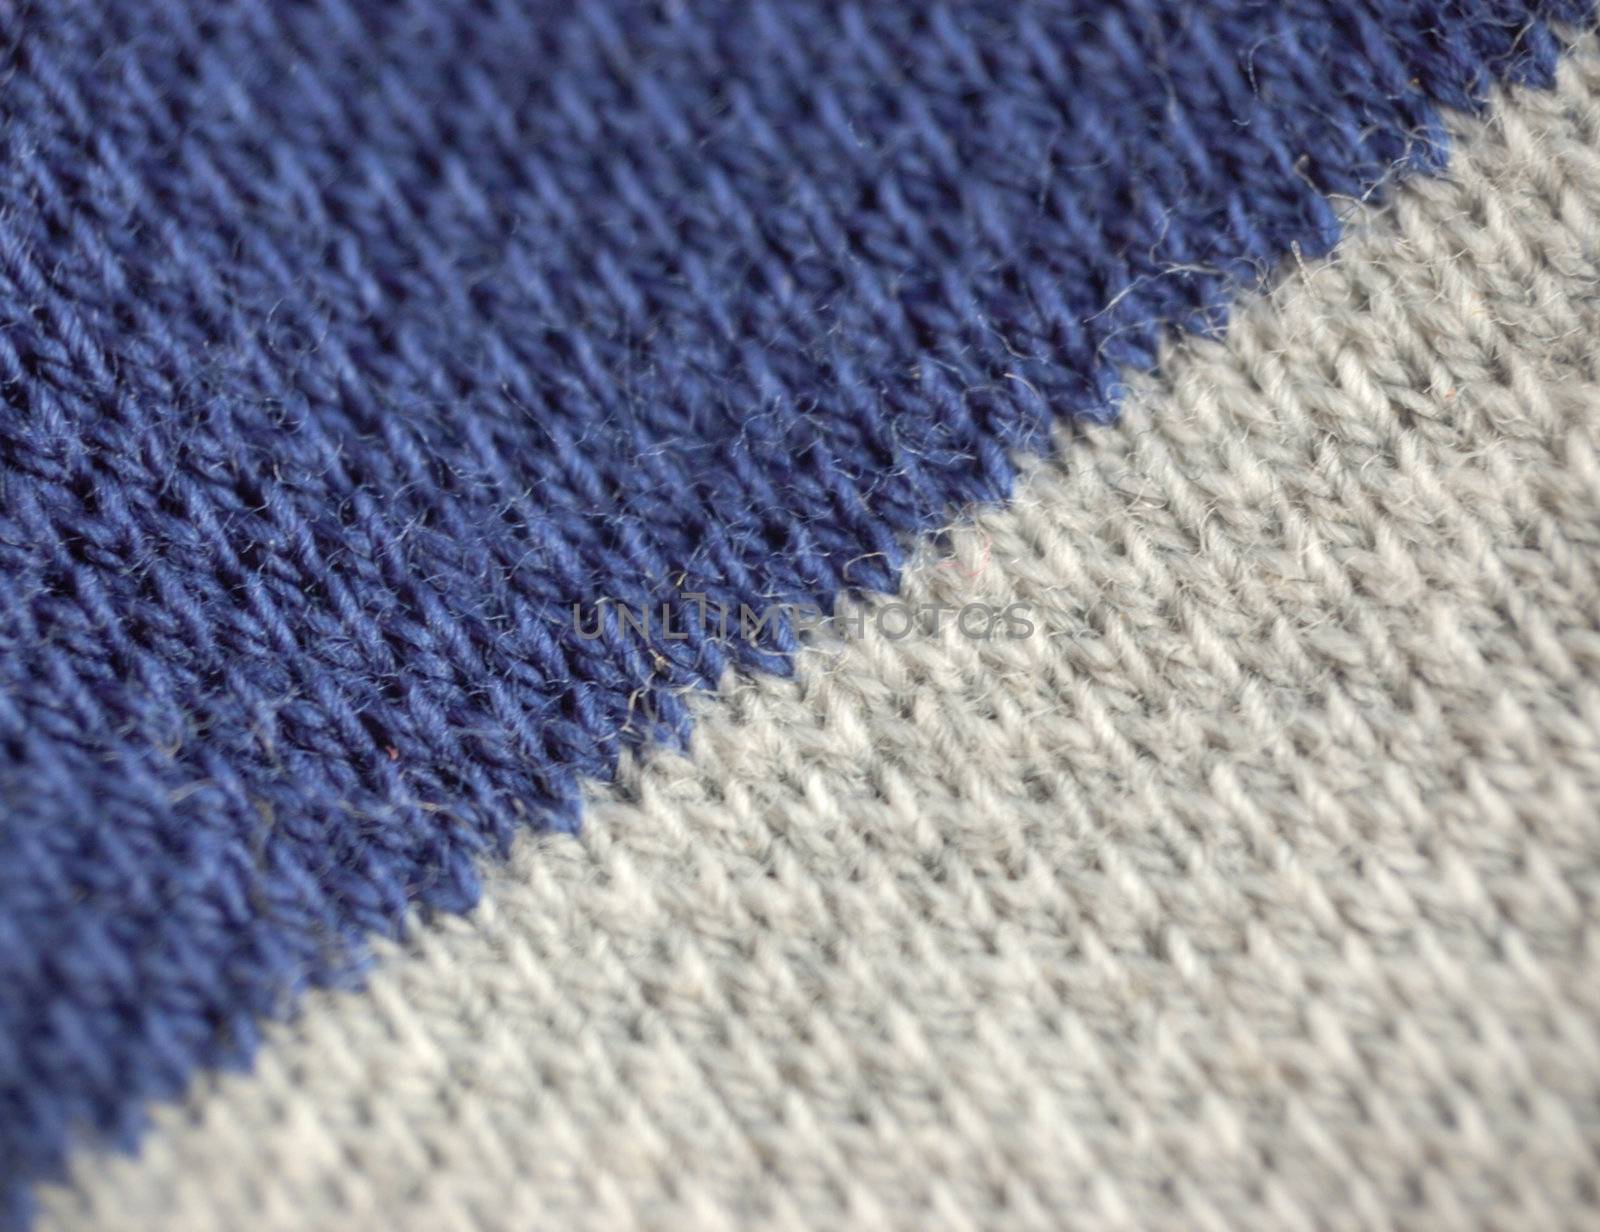 macro pattern of blue - grey textile fabric